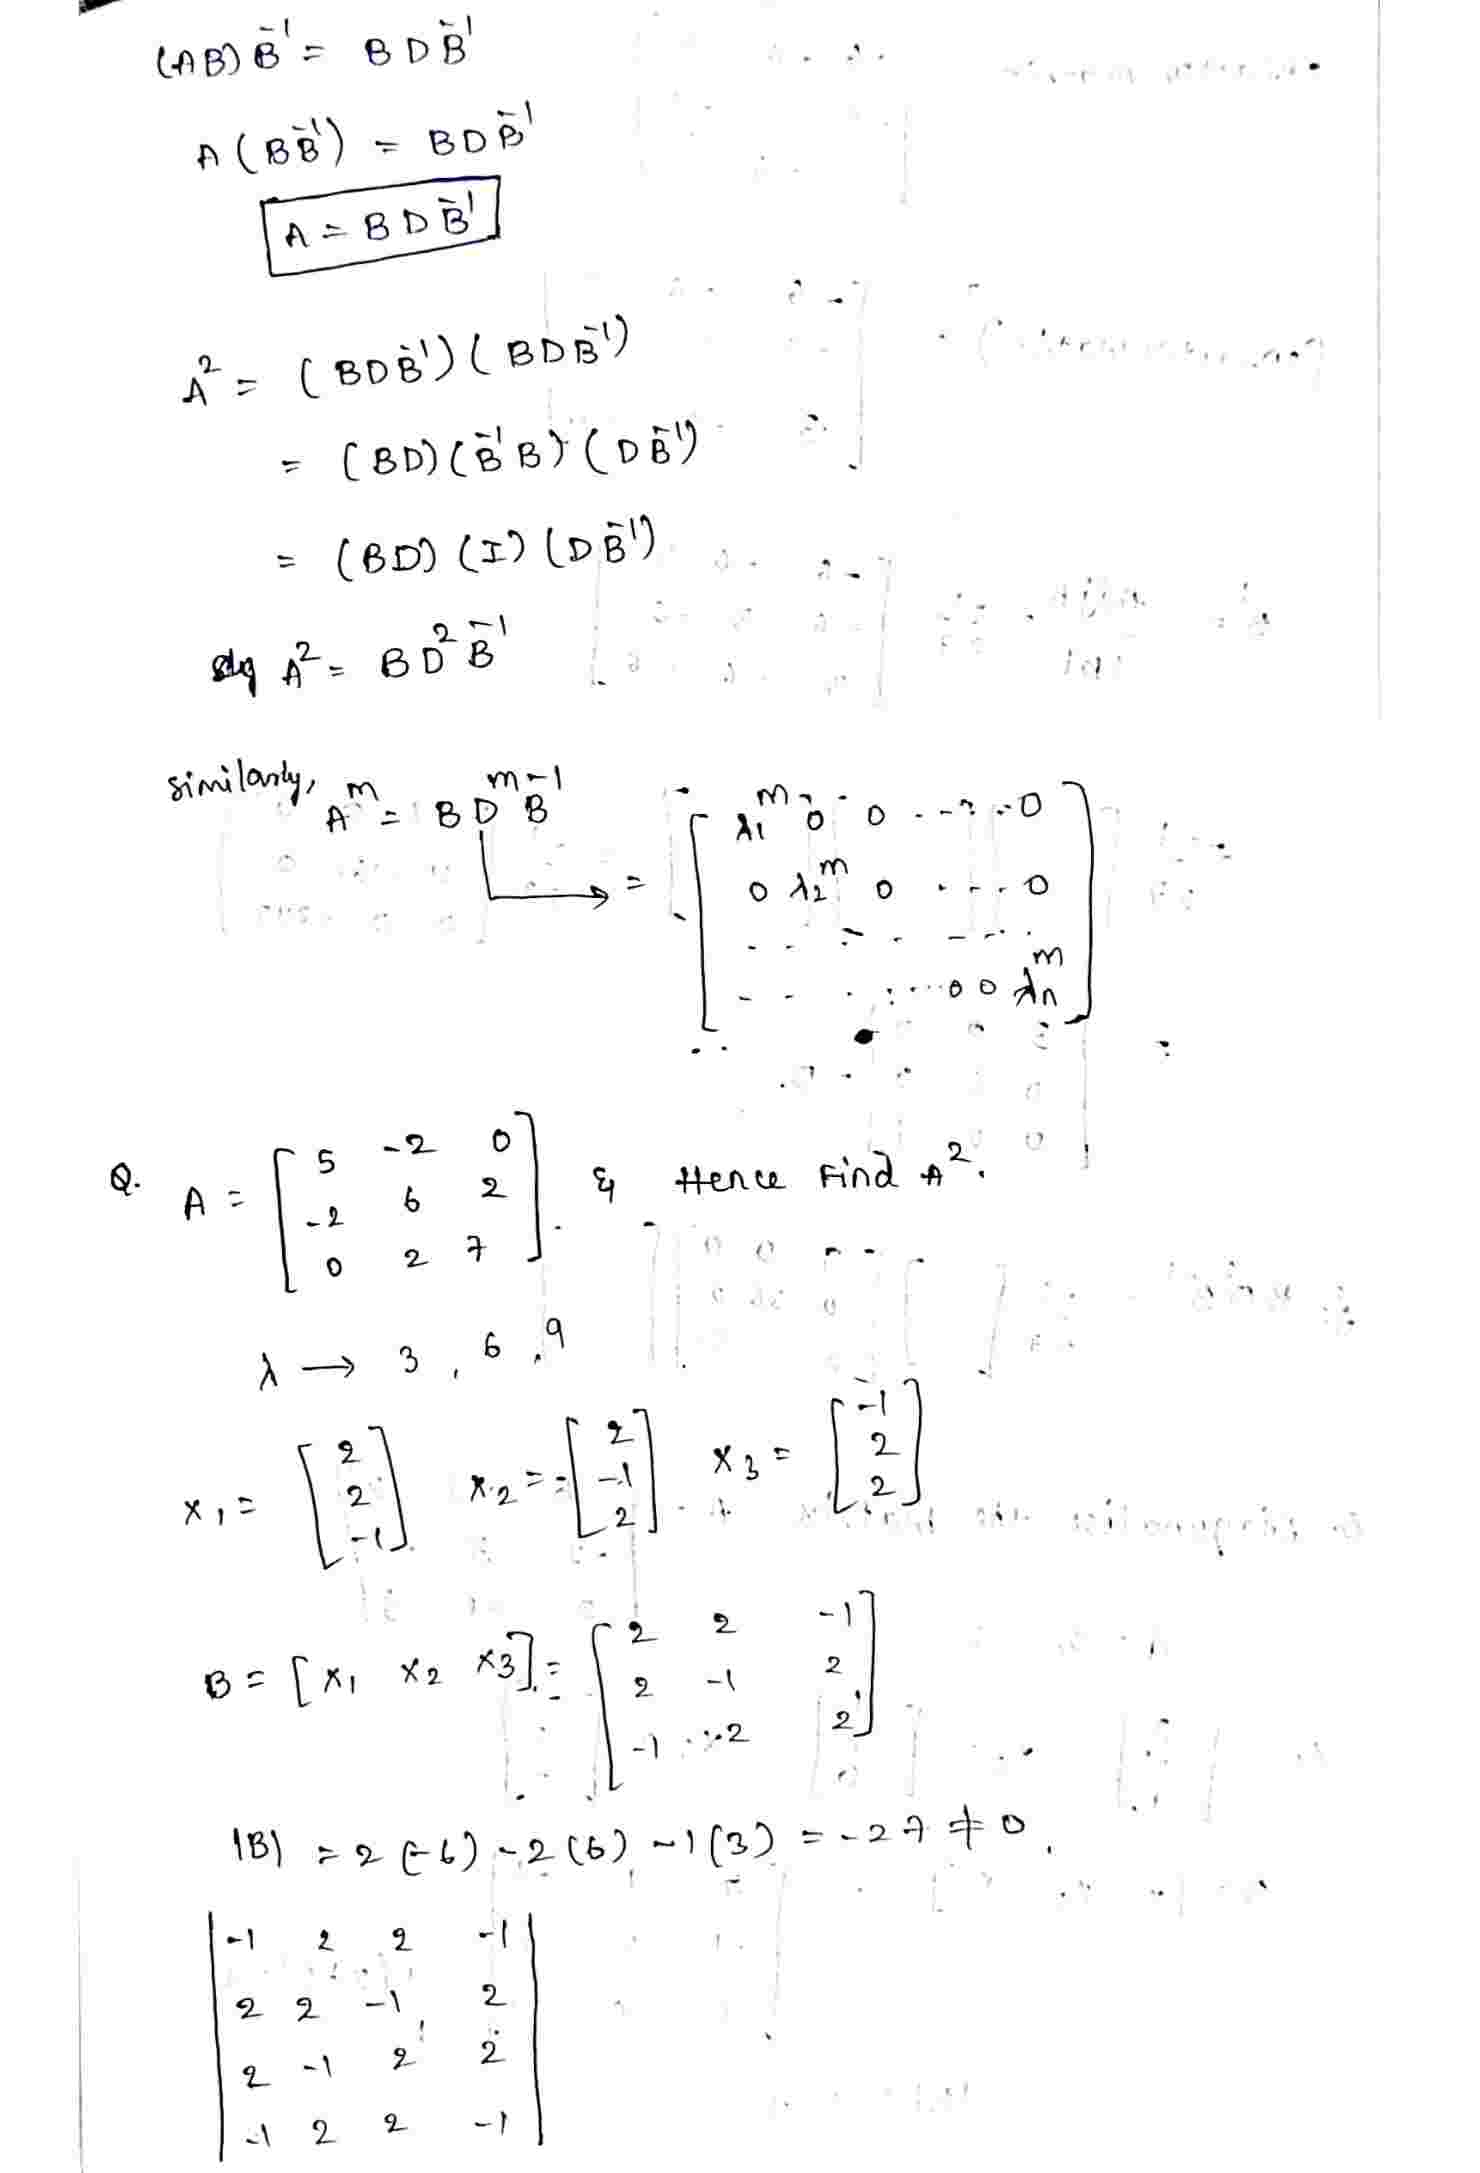 Diagonalization of matrix